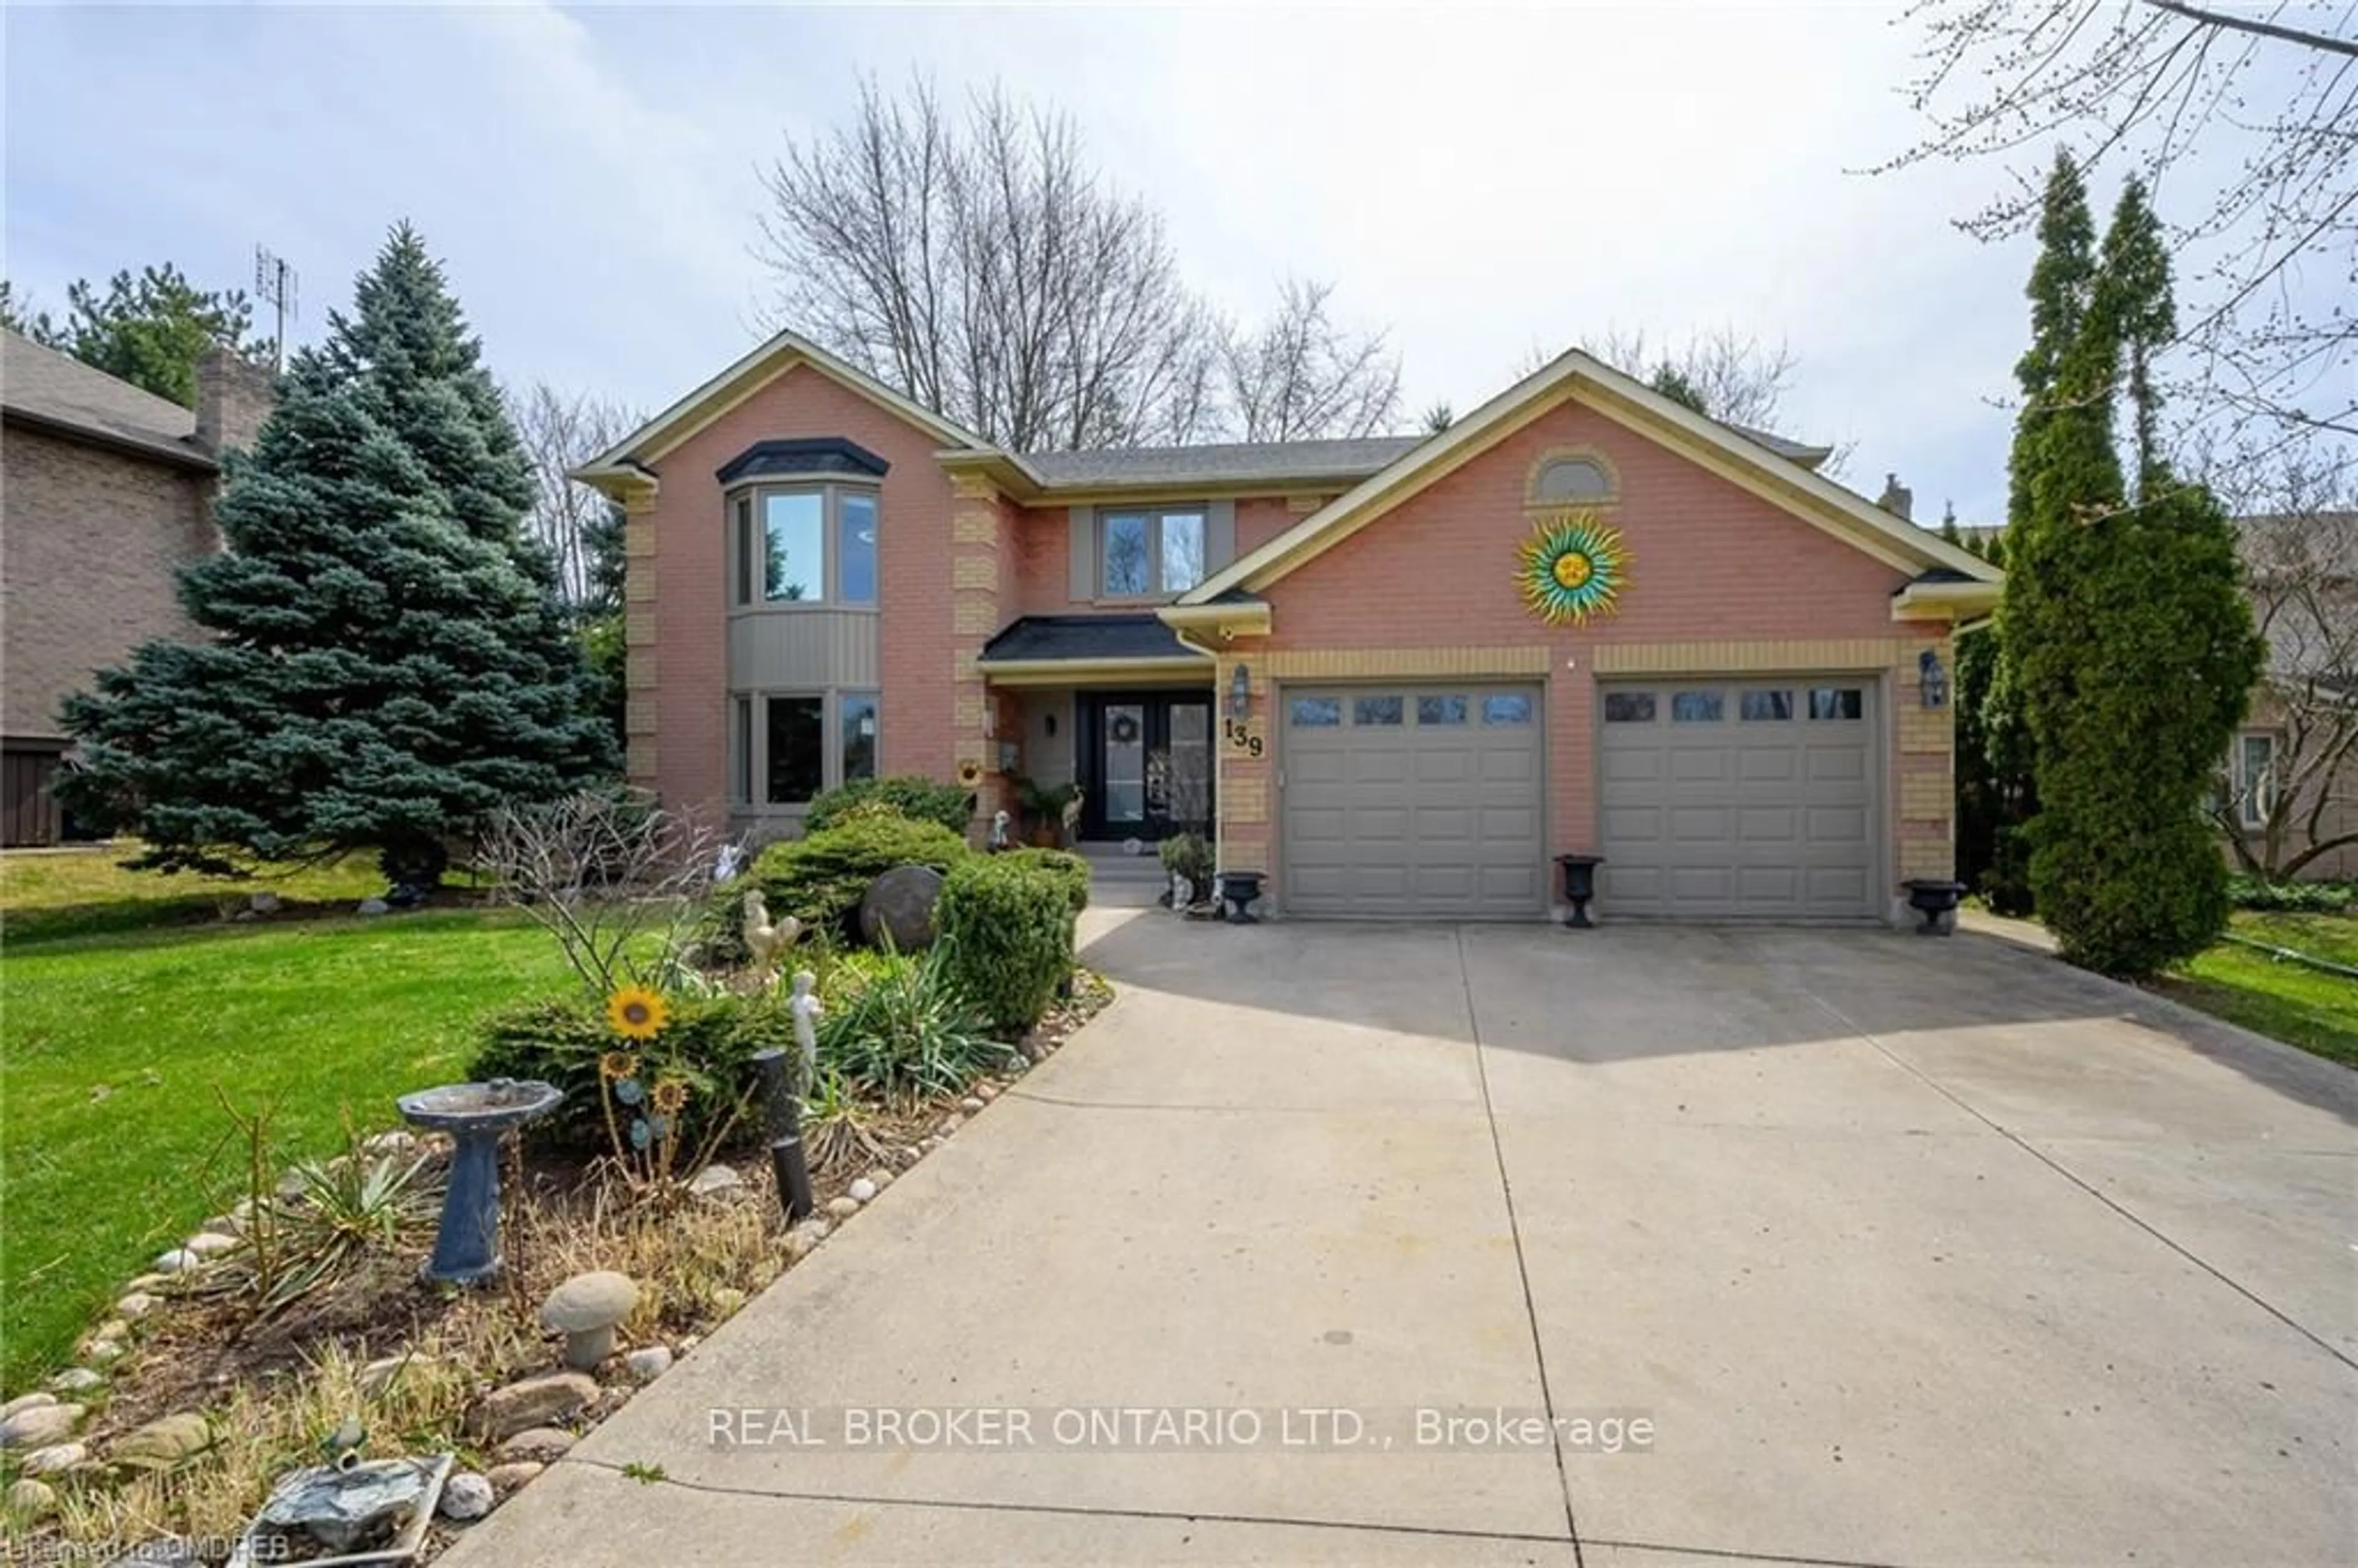 Home with brick exterior material for 139 Daffodil Cres, Hamilton Ontario L9K 1E3